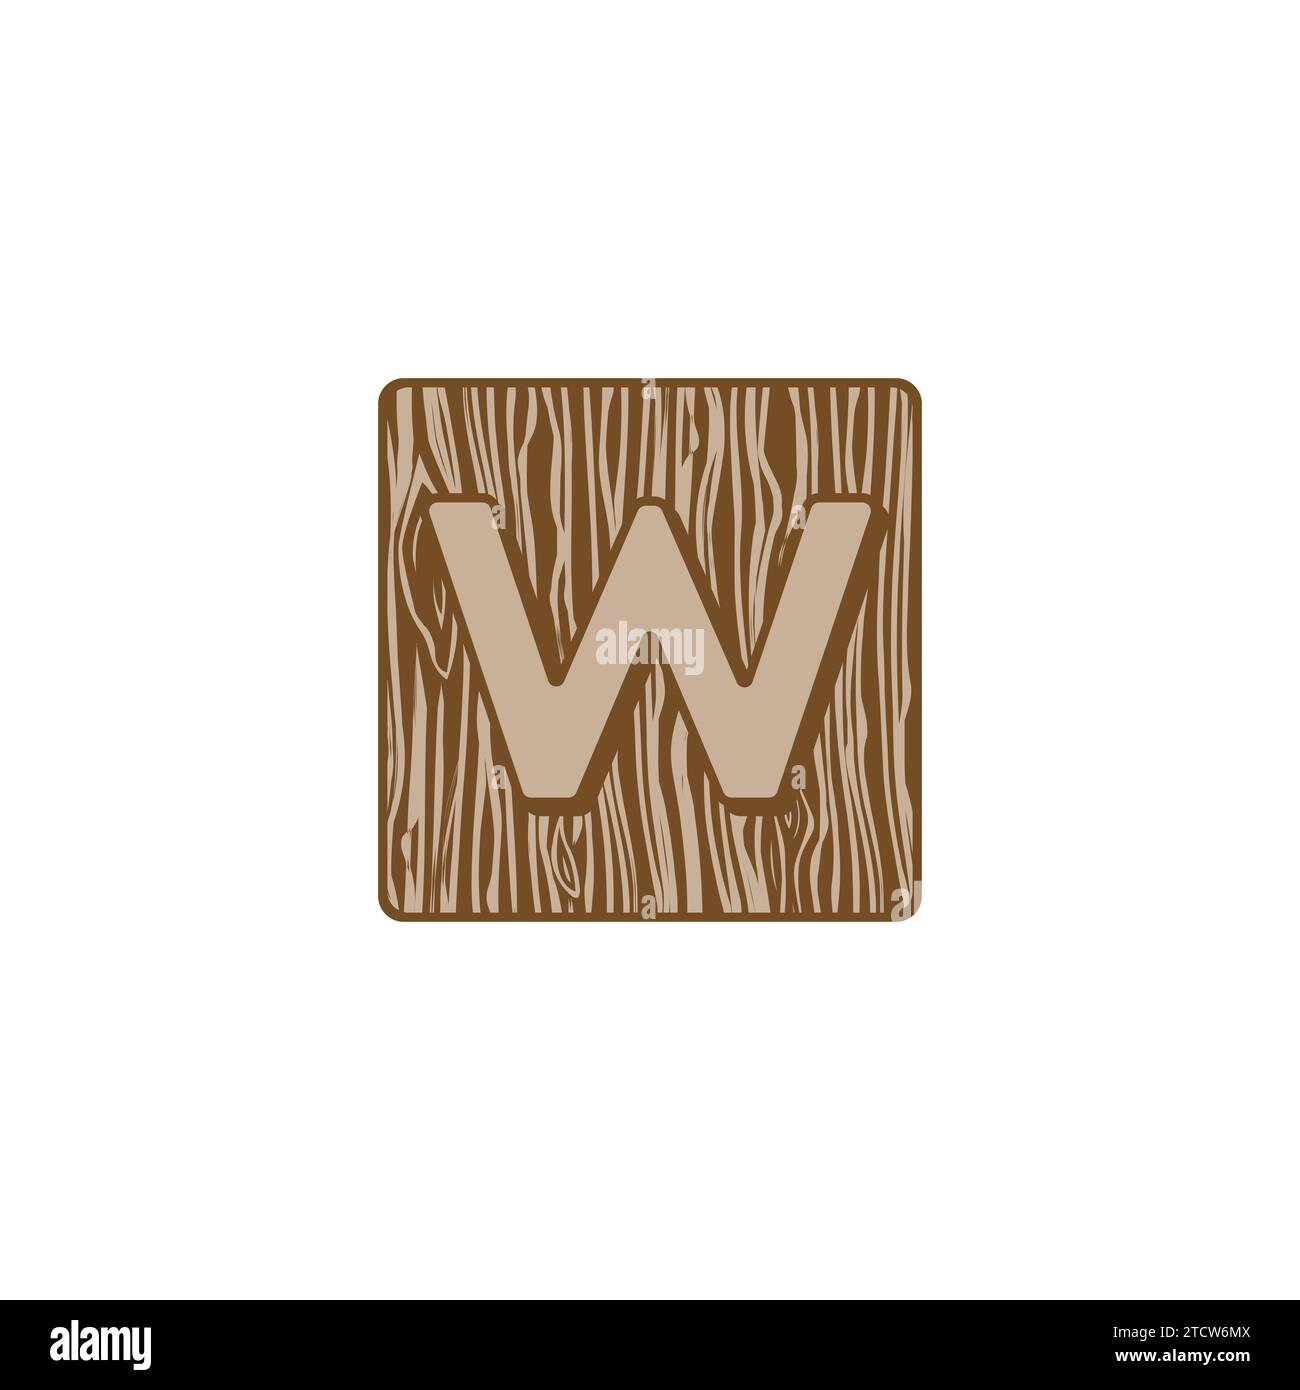 Letter w wood work logo vintage design vector image. Letter w logo icon design template elements, Capenter industry logo design Stock Vector